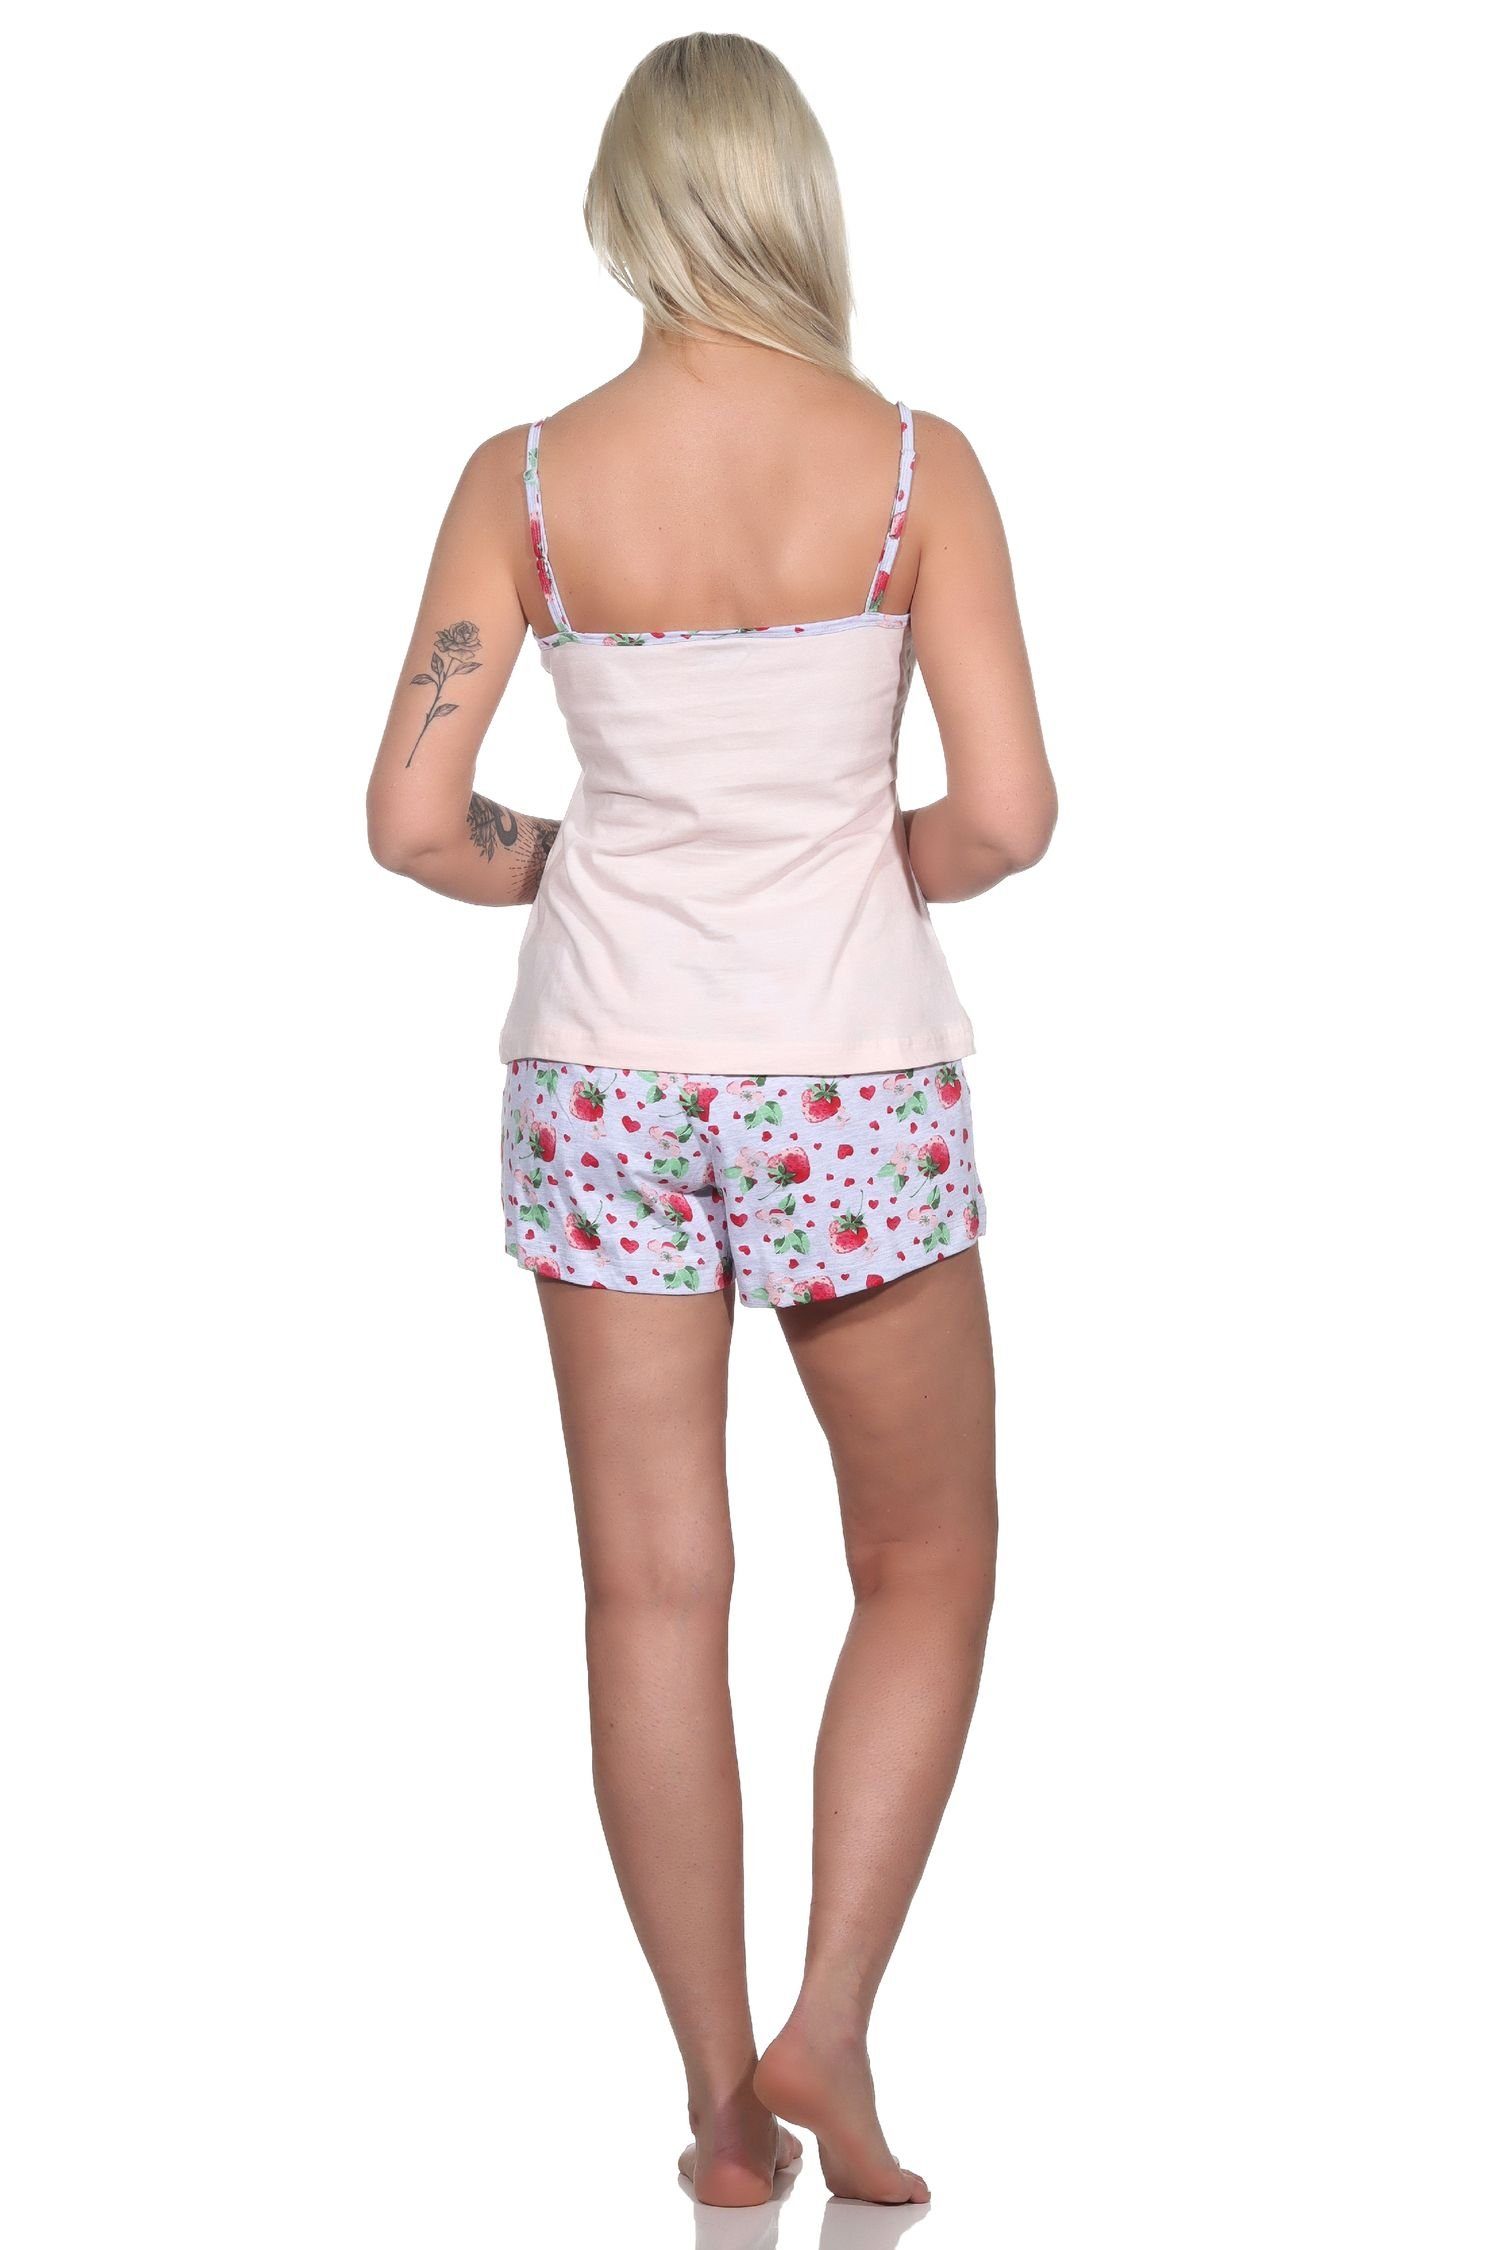 Normann Shorty ärmelloser rosa Damen Spaghetti-Trägern Pyjama Süsser mit Schlafanzug